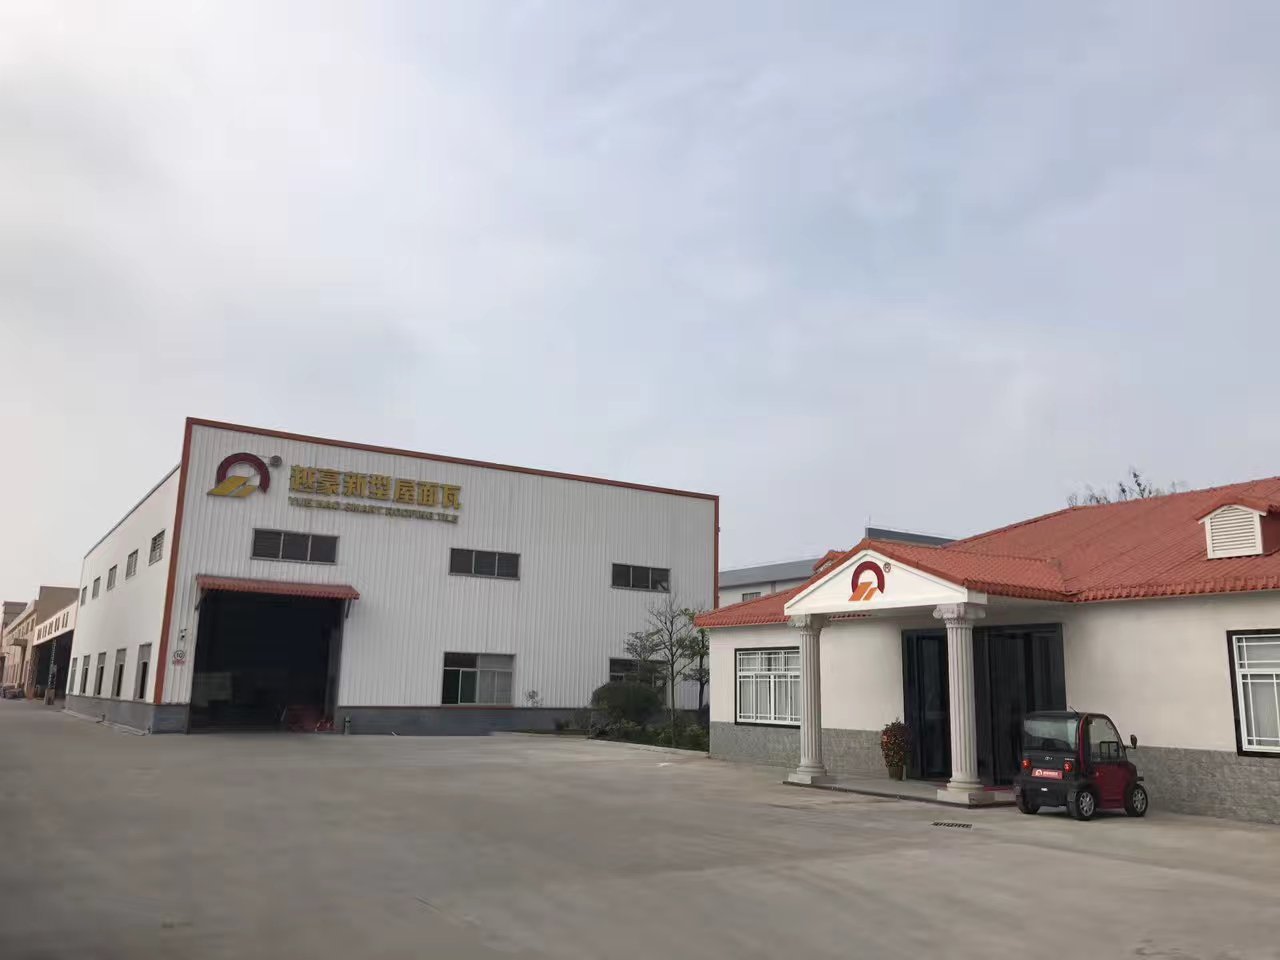 Foshan Yuehao Building Materials Technology Co., Ltd.